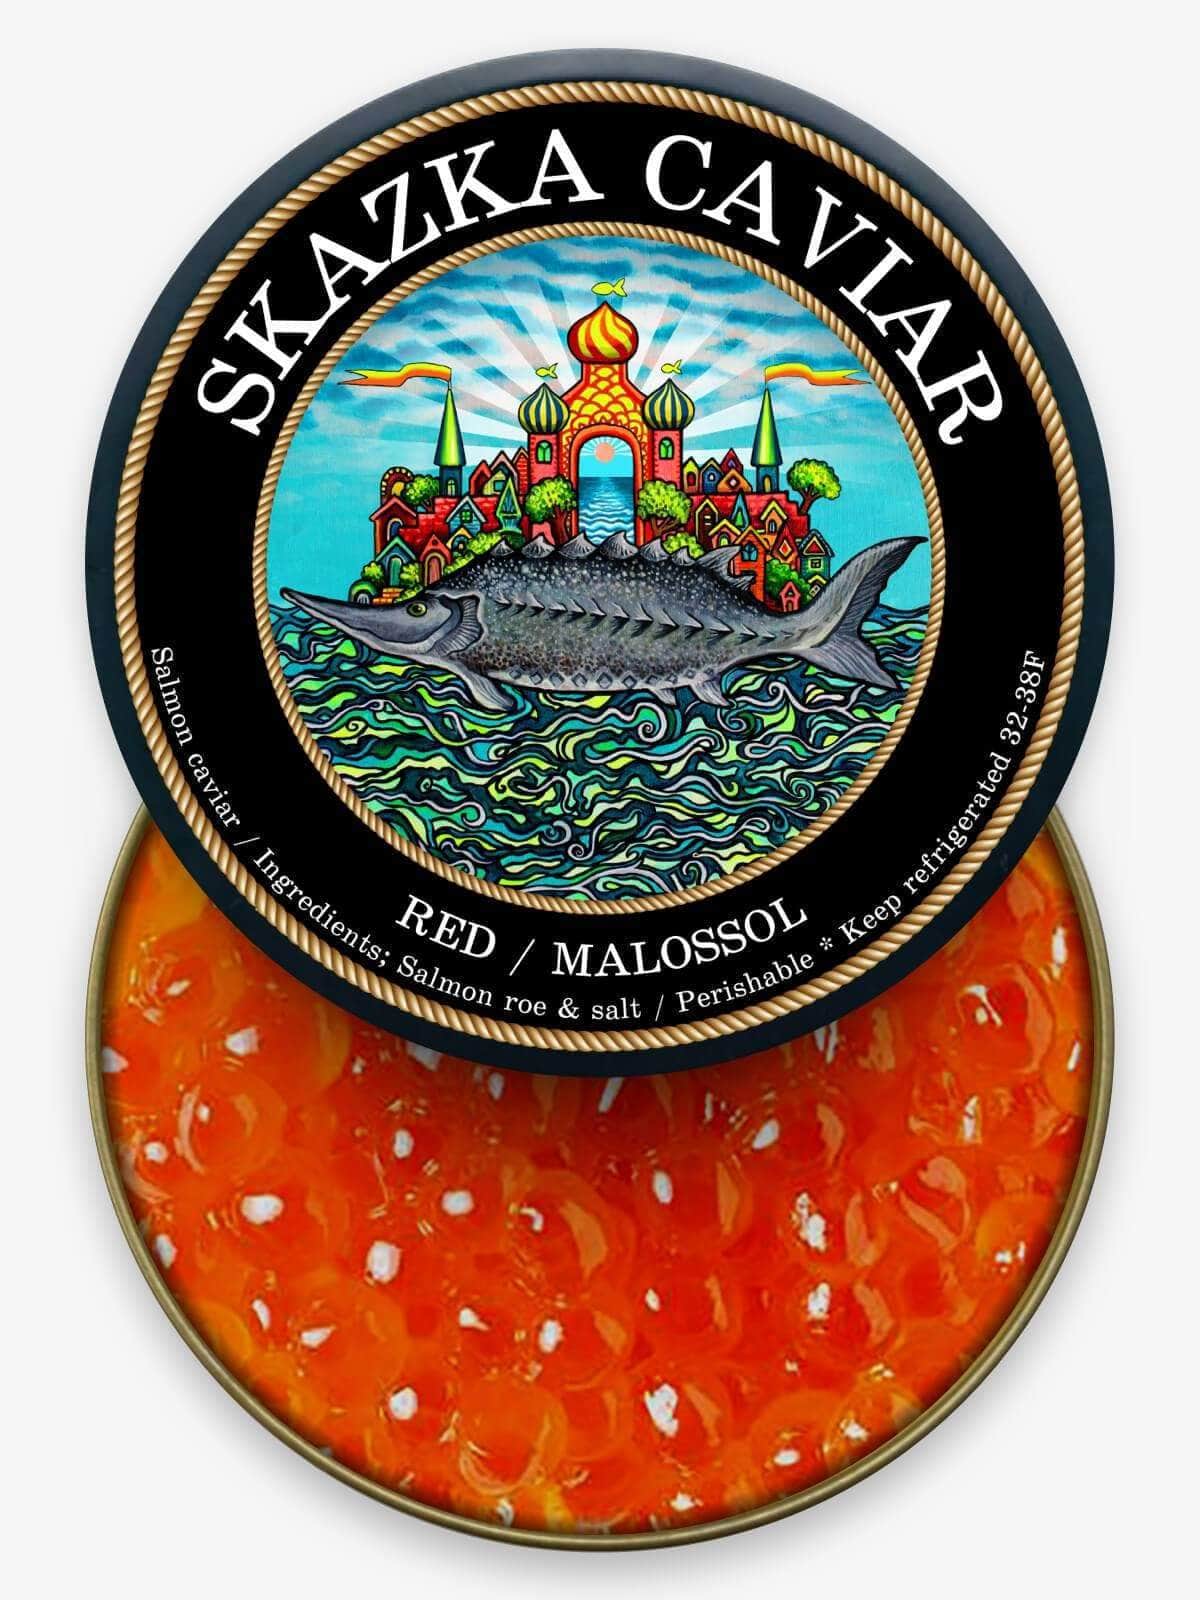 Alaskan Salmon Roe/Caviar - Caviar Skazka